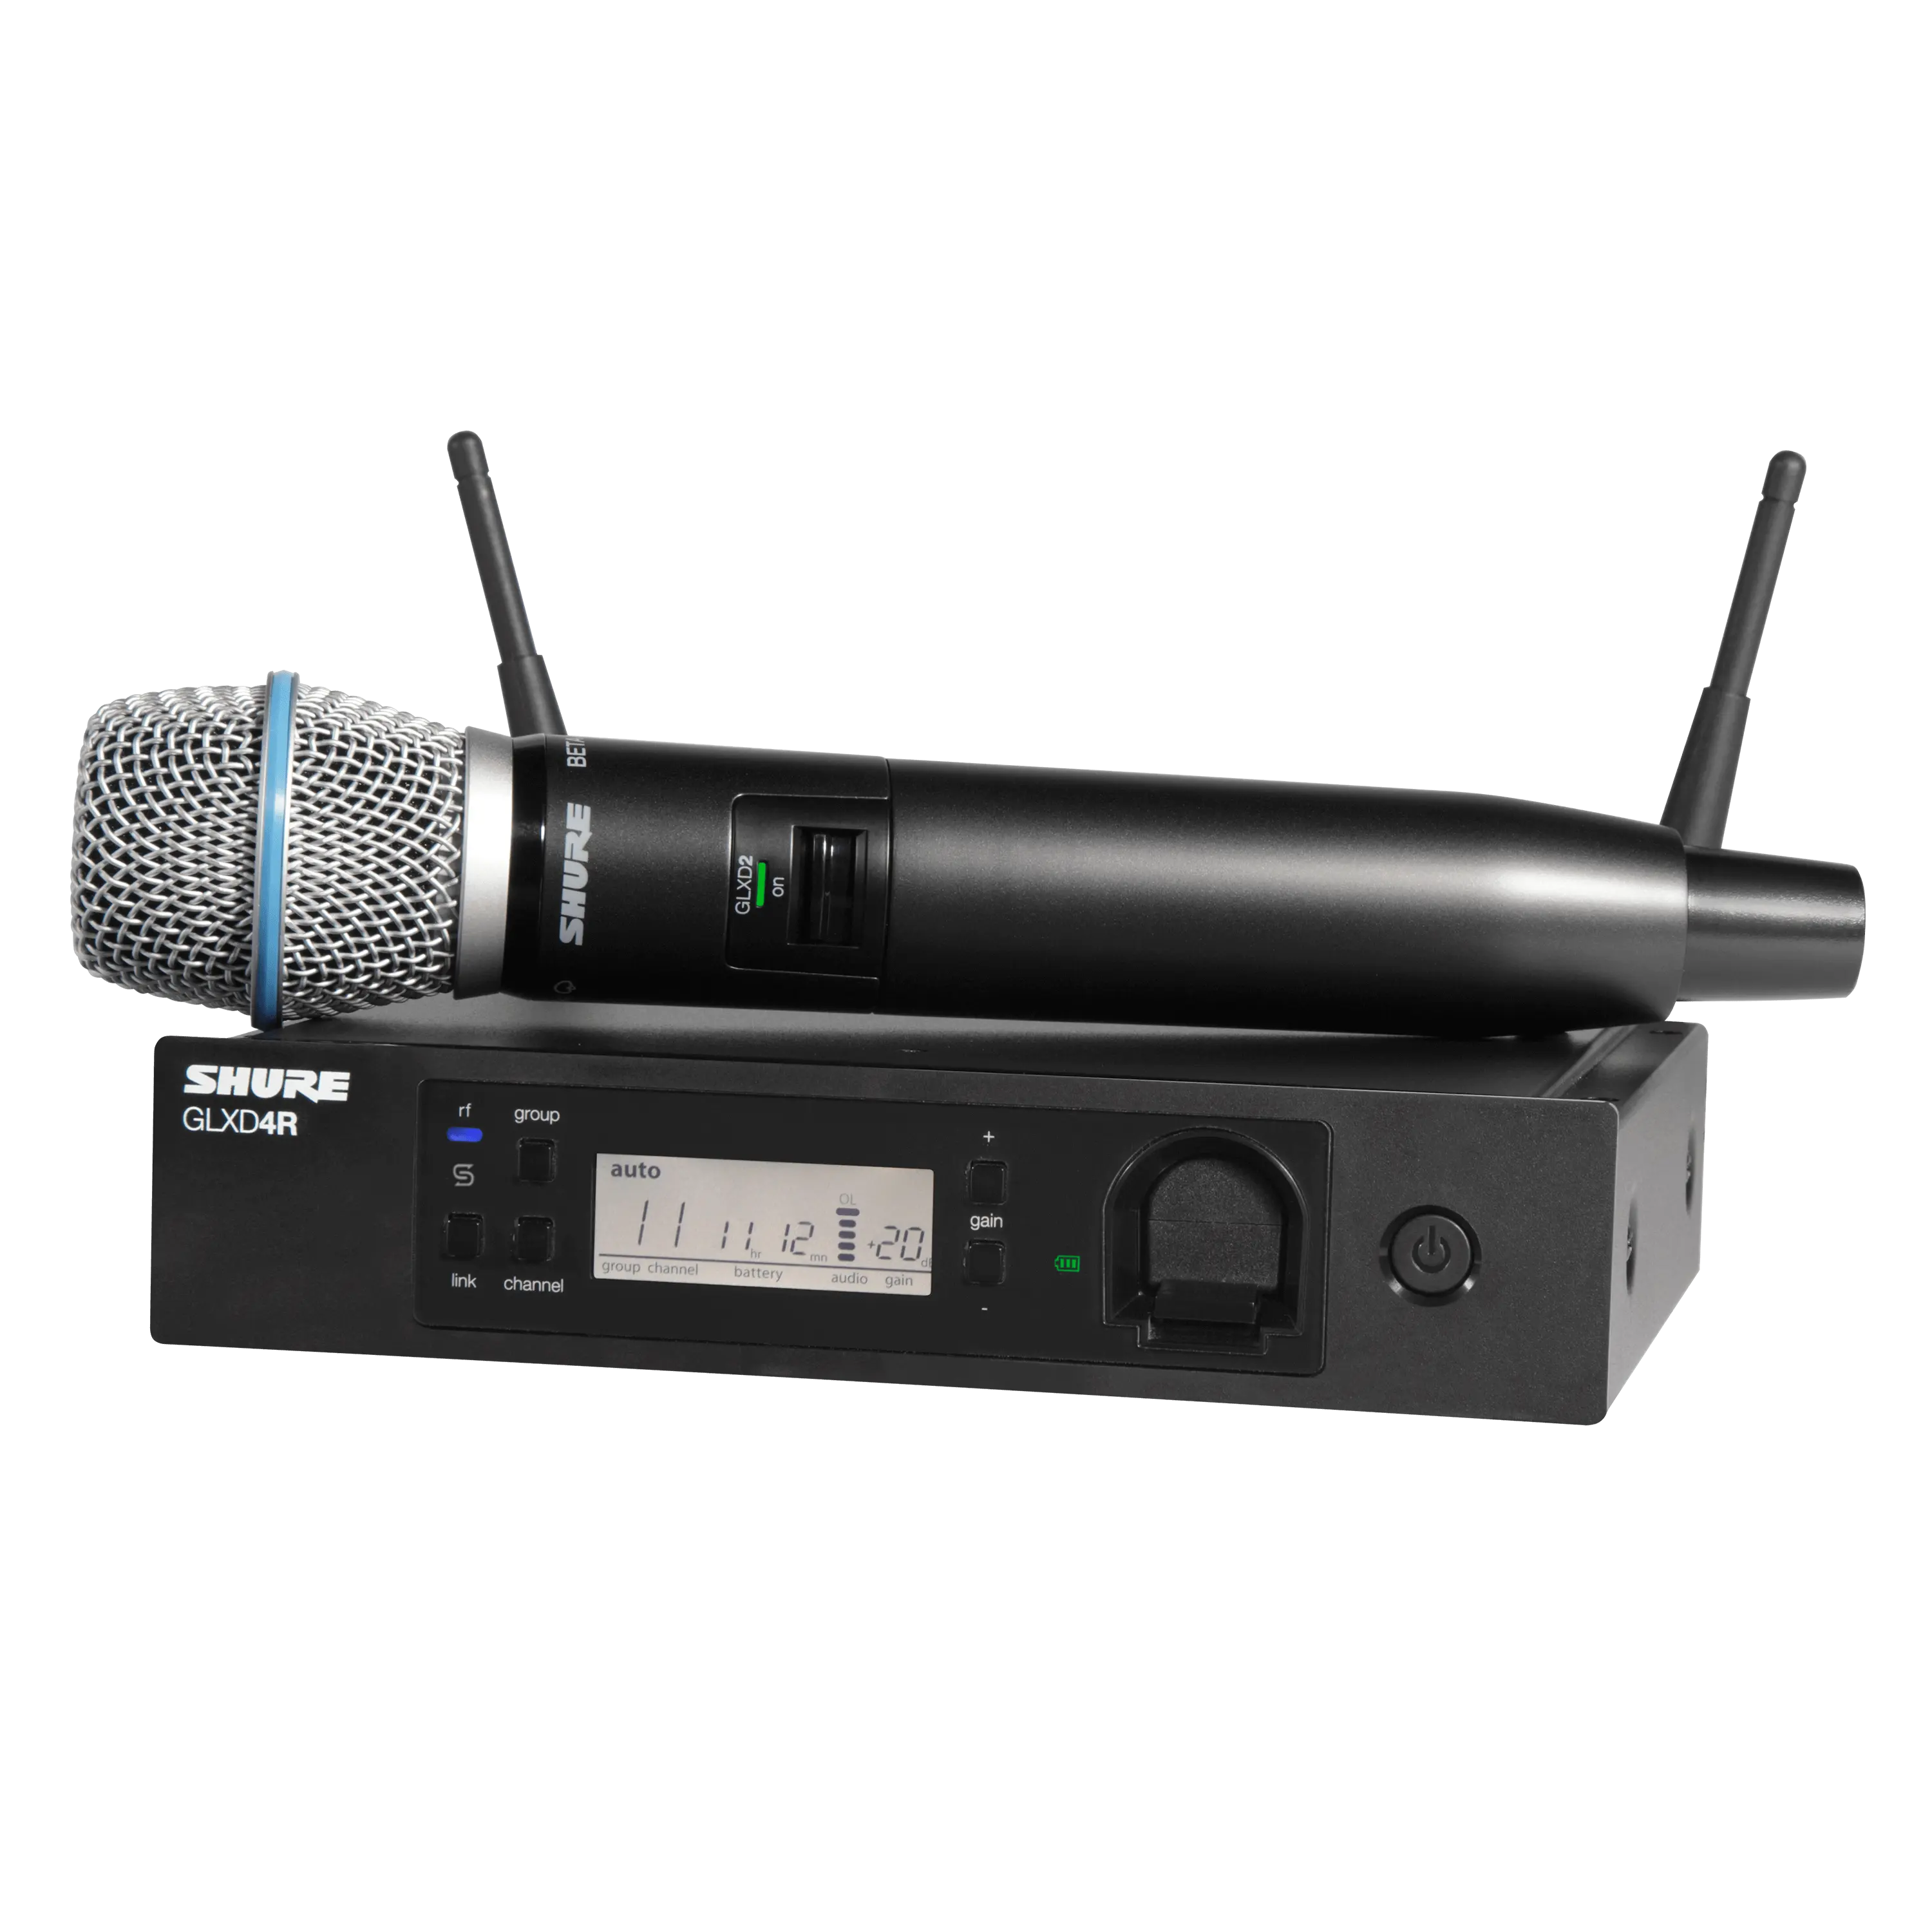 SENNESAI GLXD4 B87c Professional Dual Wireless Microphone 600-699mhz System  Stage Performances UHF Dynamic 2 Channel Handheld